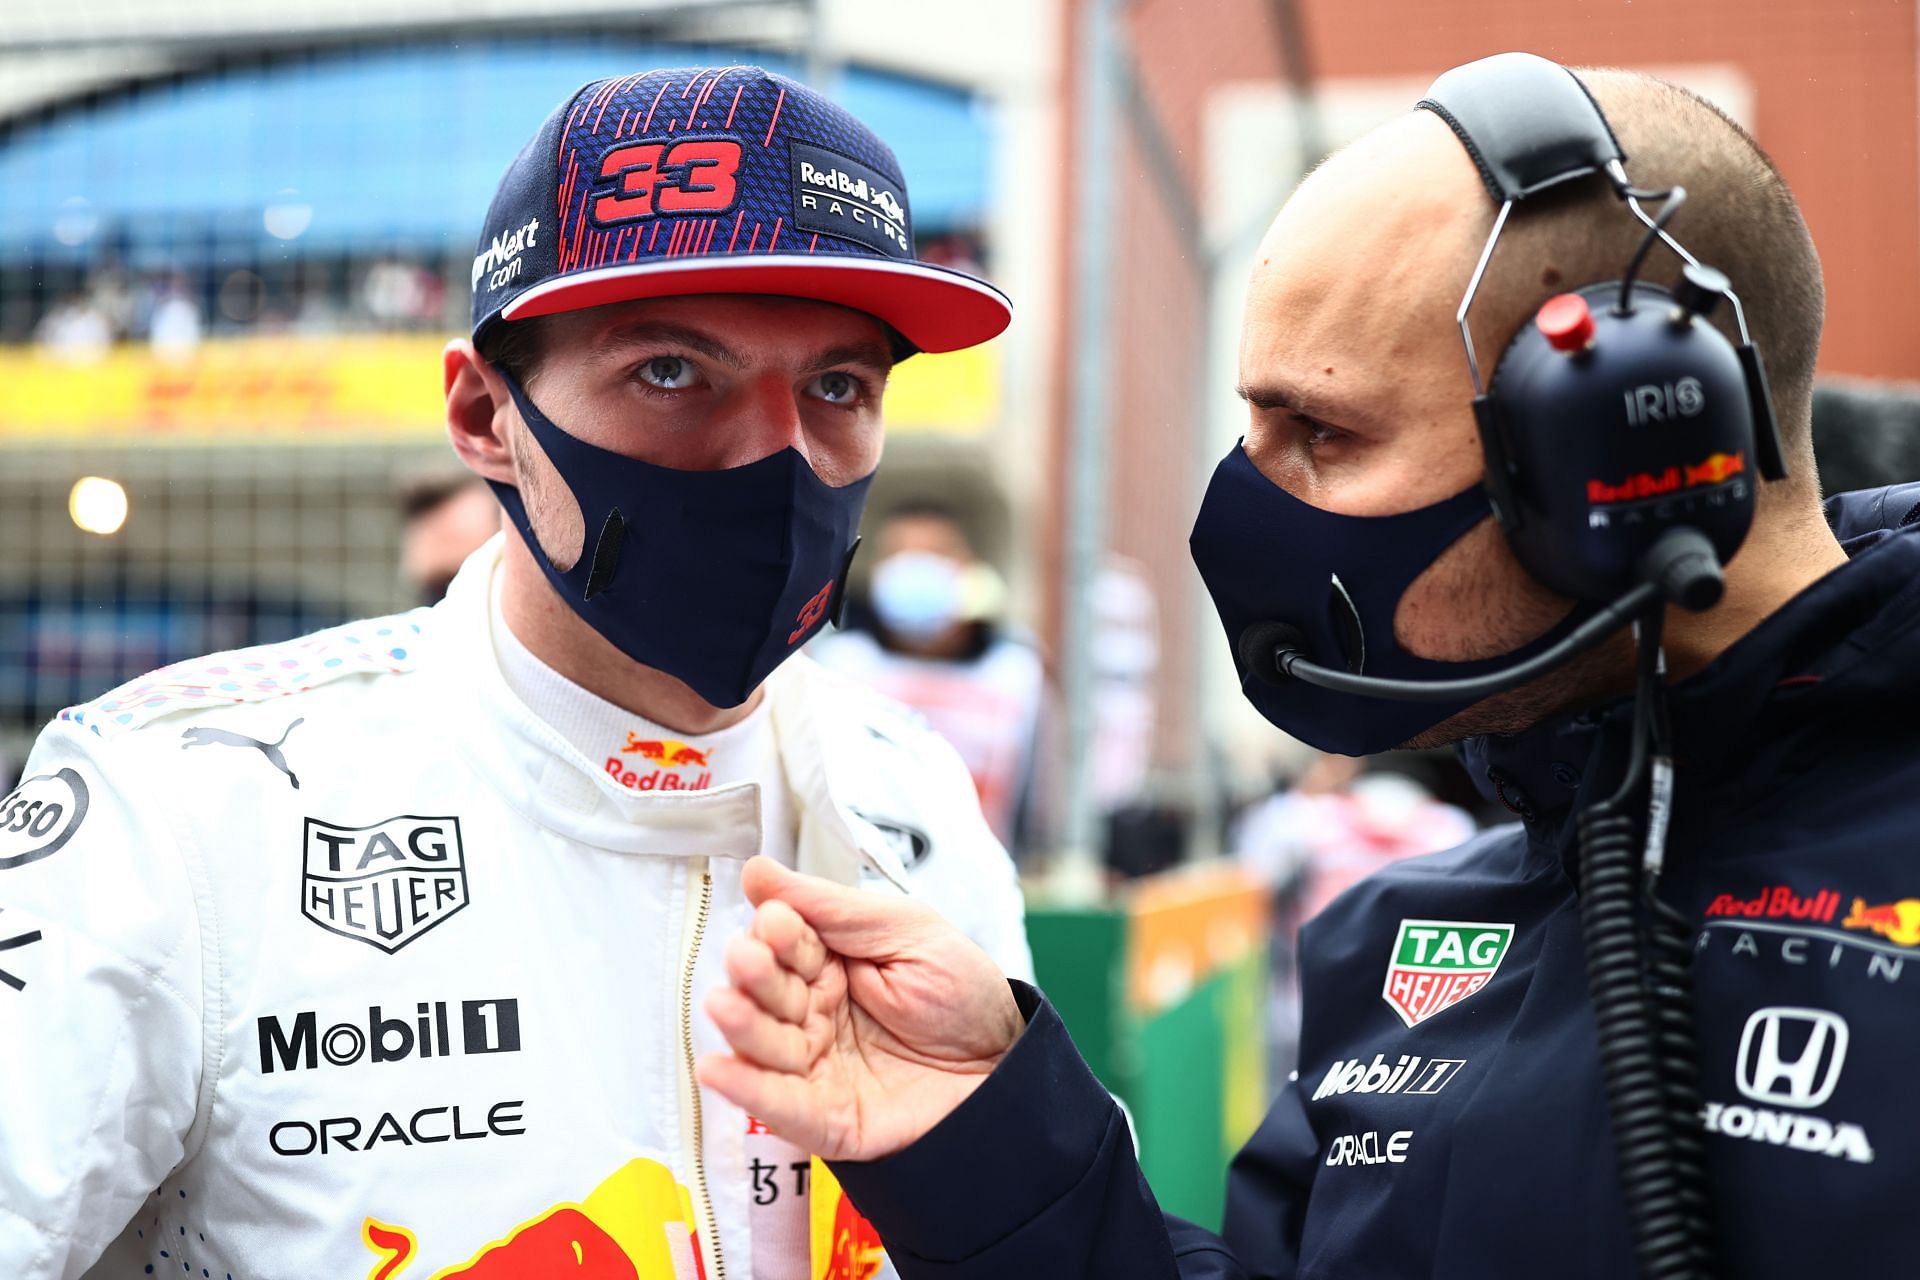 F1 Grand Prix of Turkey - Max Verstappen talks to Gianpiero Lambiase in Turkey.